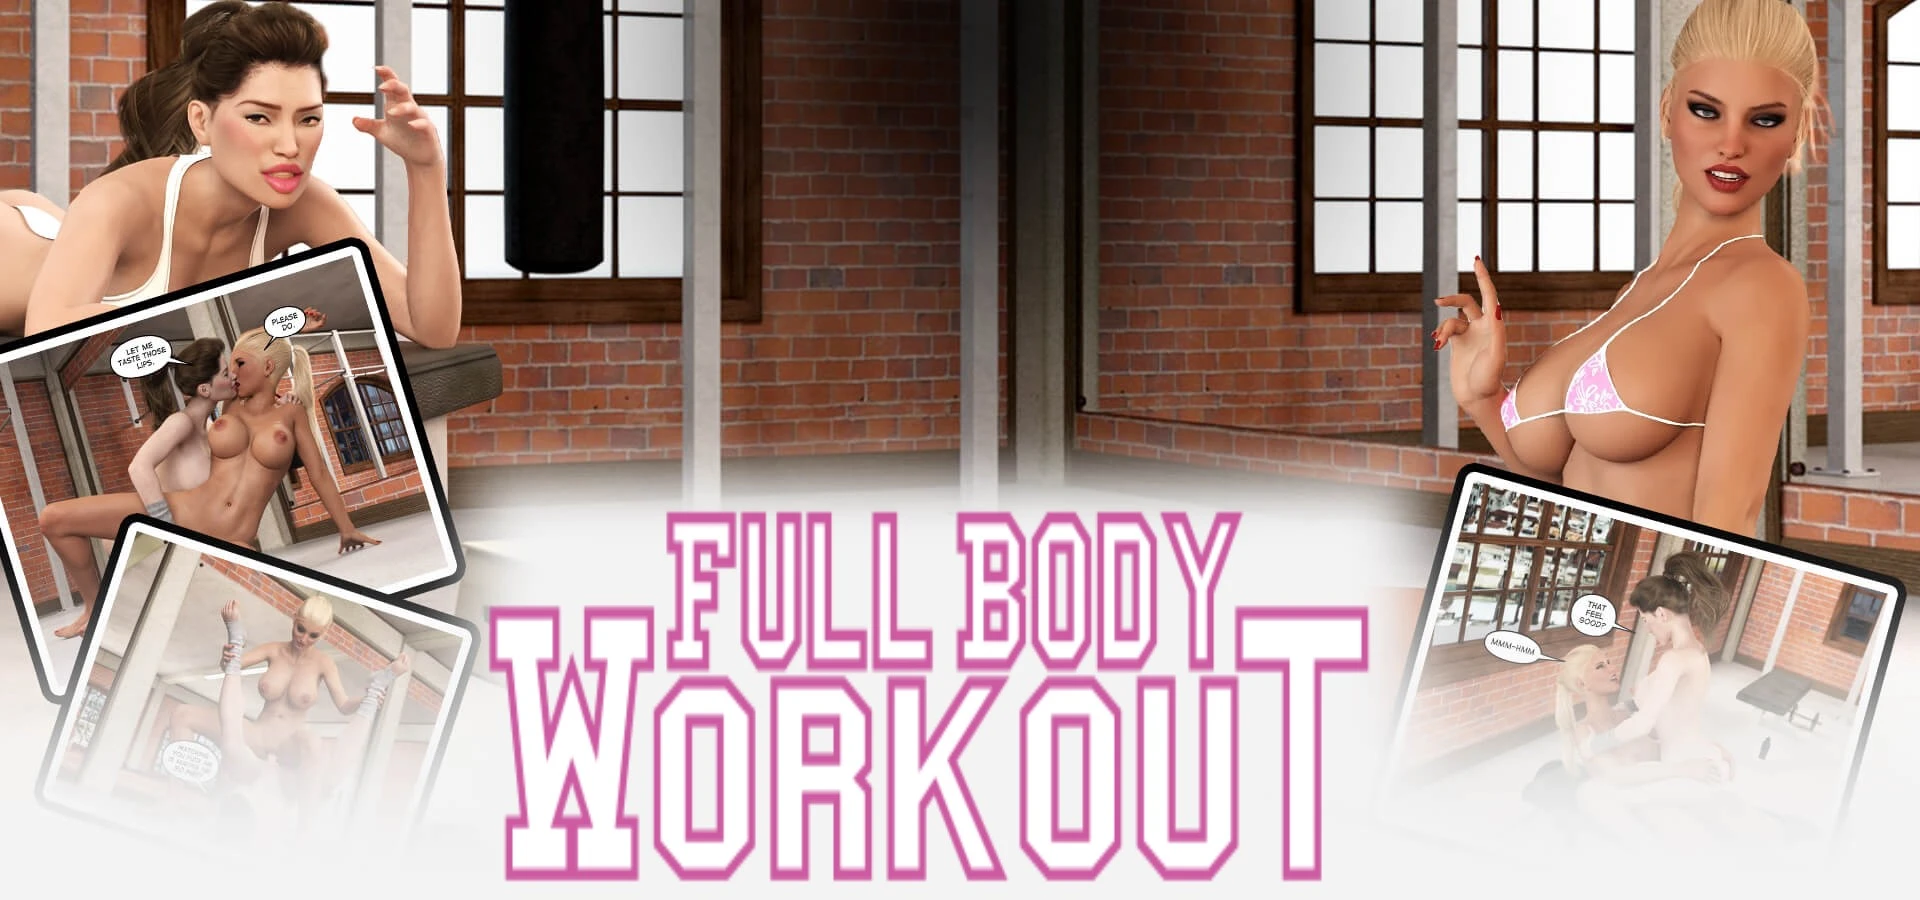 Full Body Workout main image